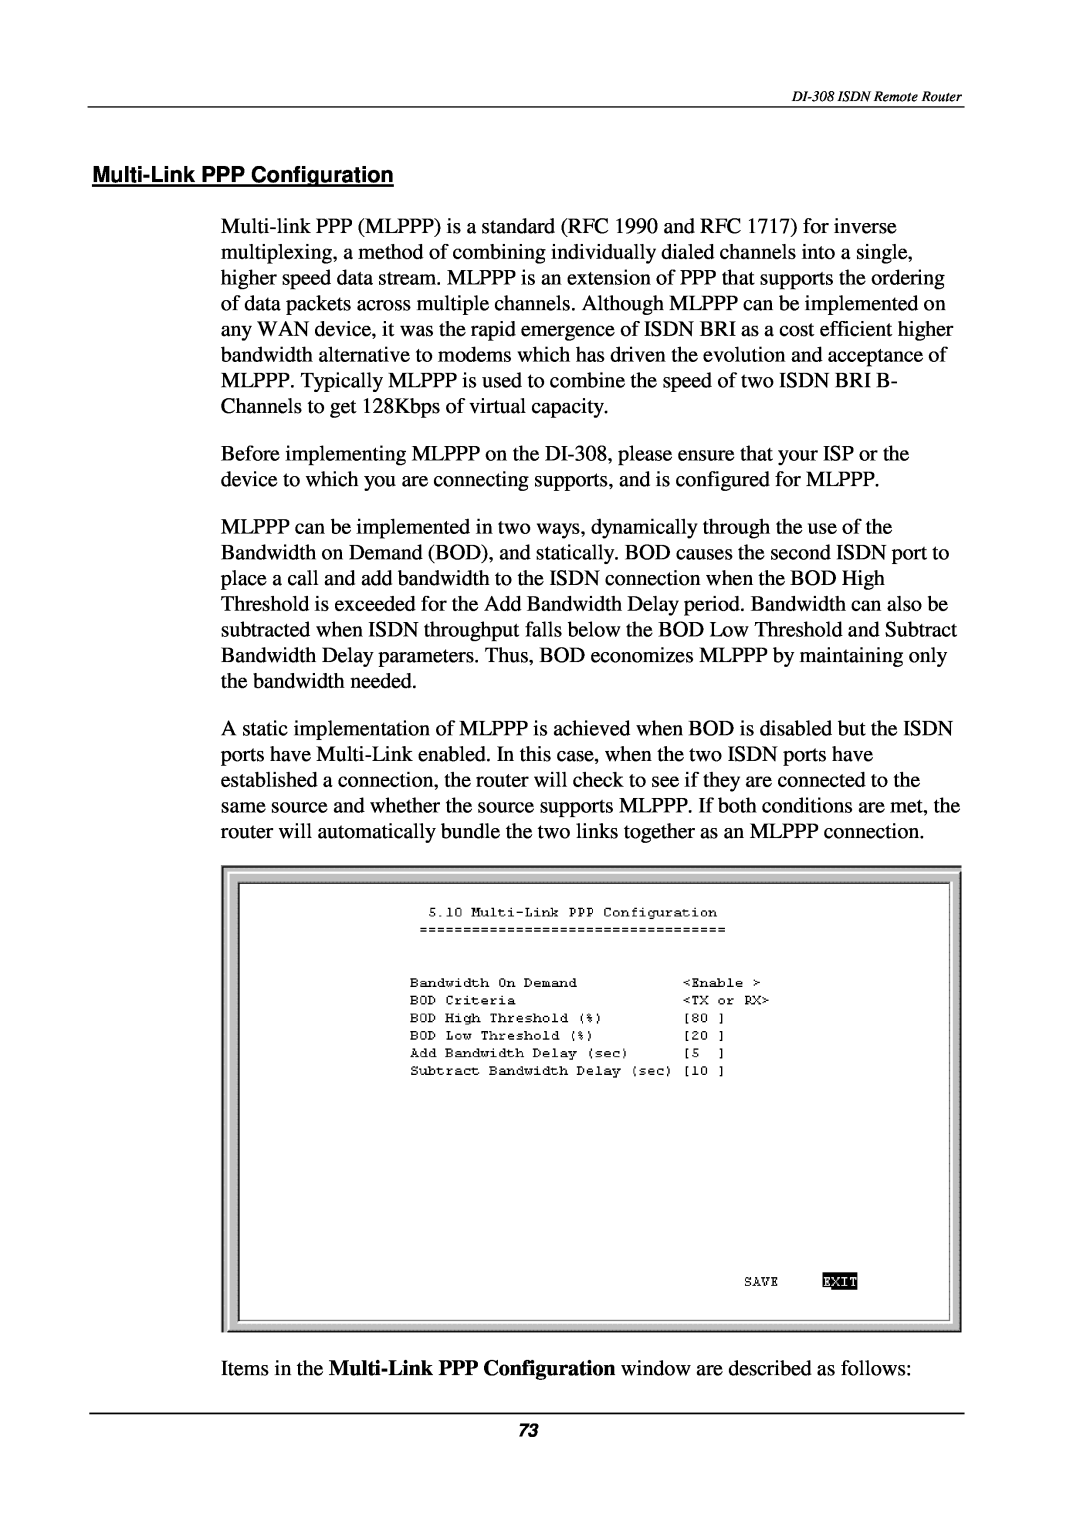 D-Link DI-308 manual Multi-Link PPP Configuration 